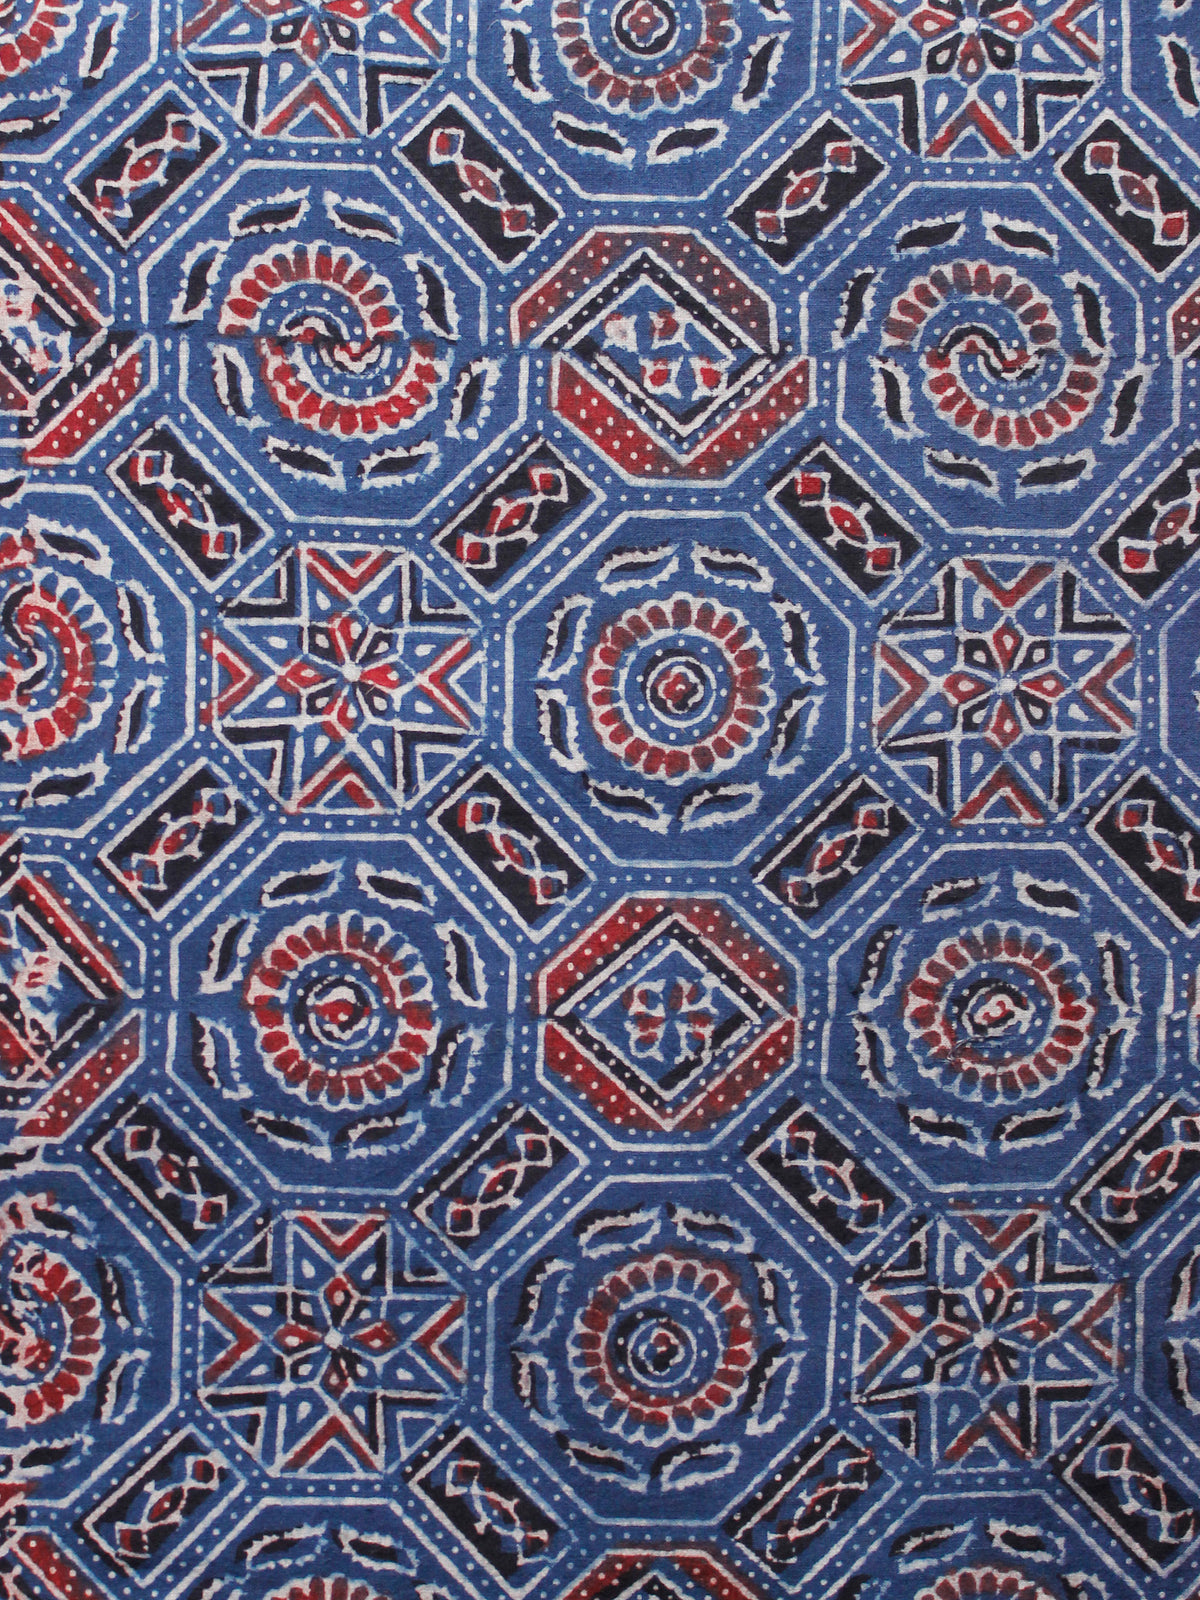 Indigo Red Black Ivory Ajrakh Hand Block Printed Cotton Fabric Per Meter - F003F1631